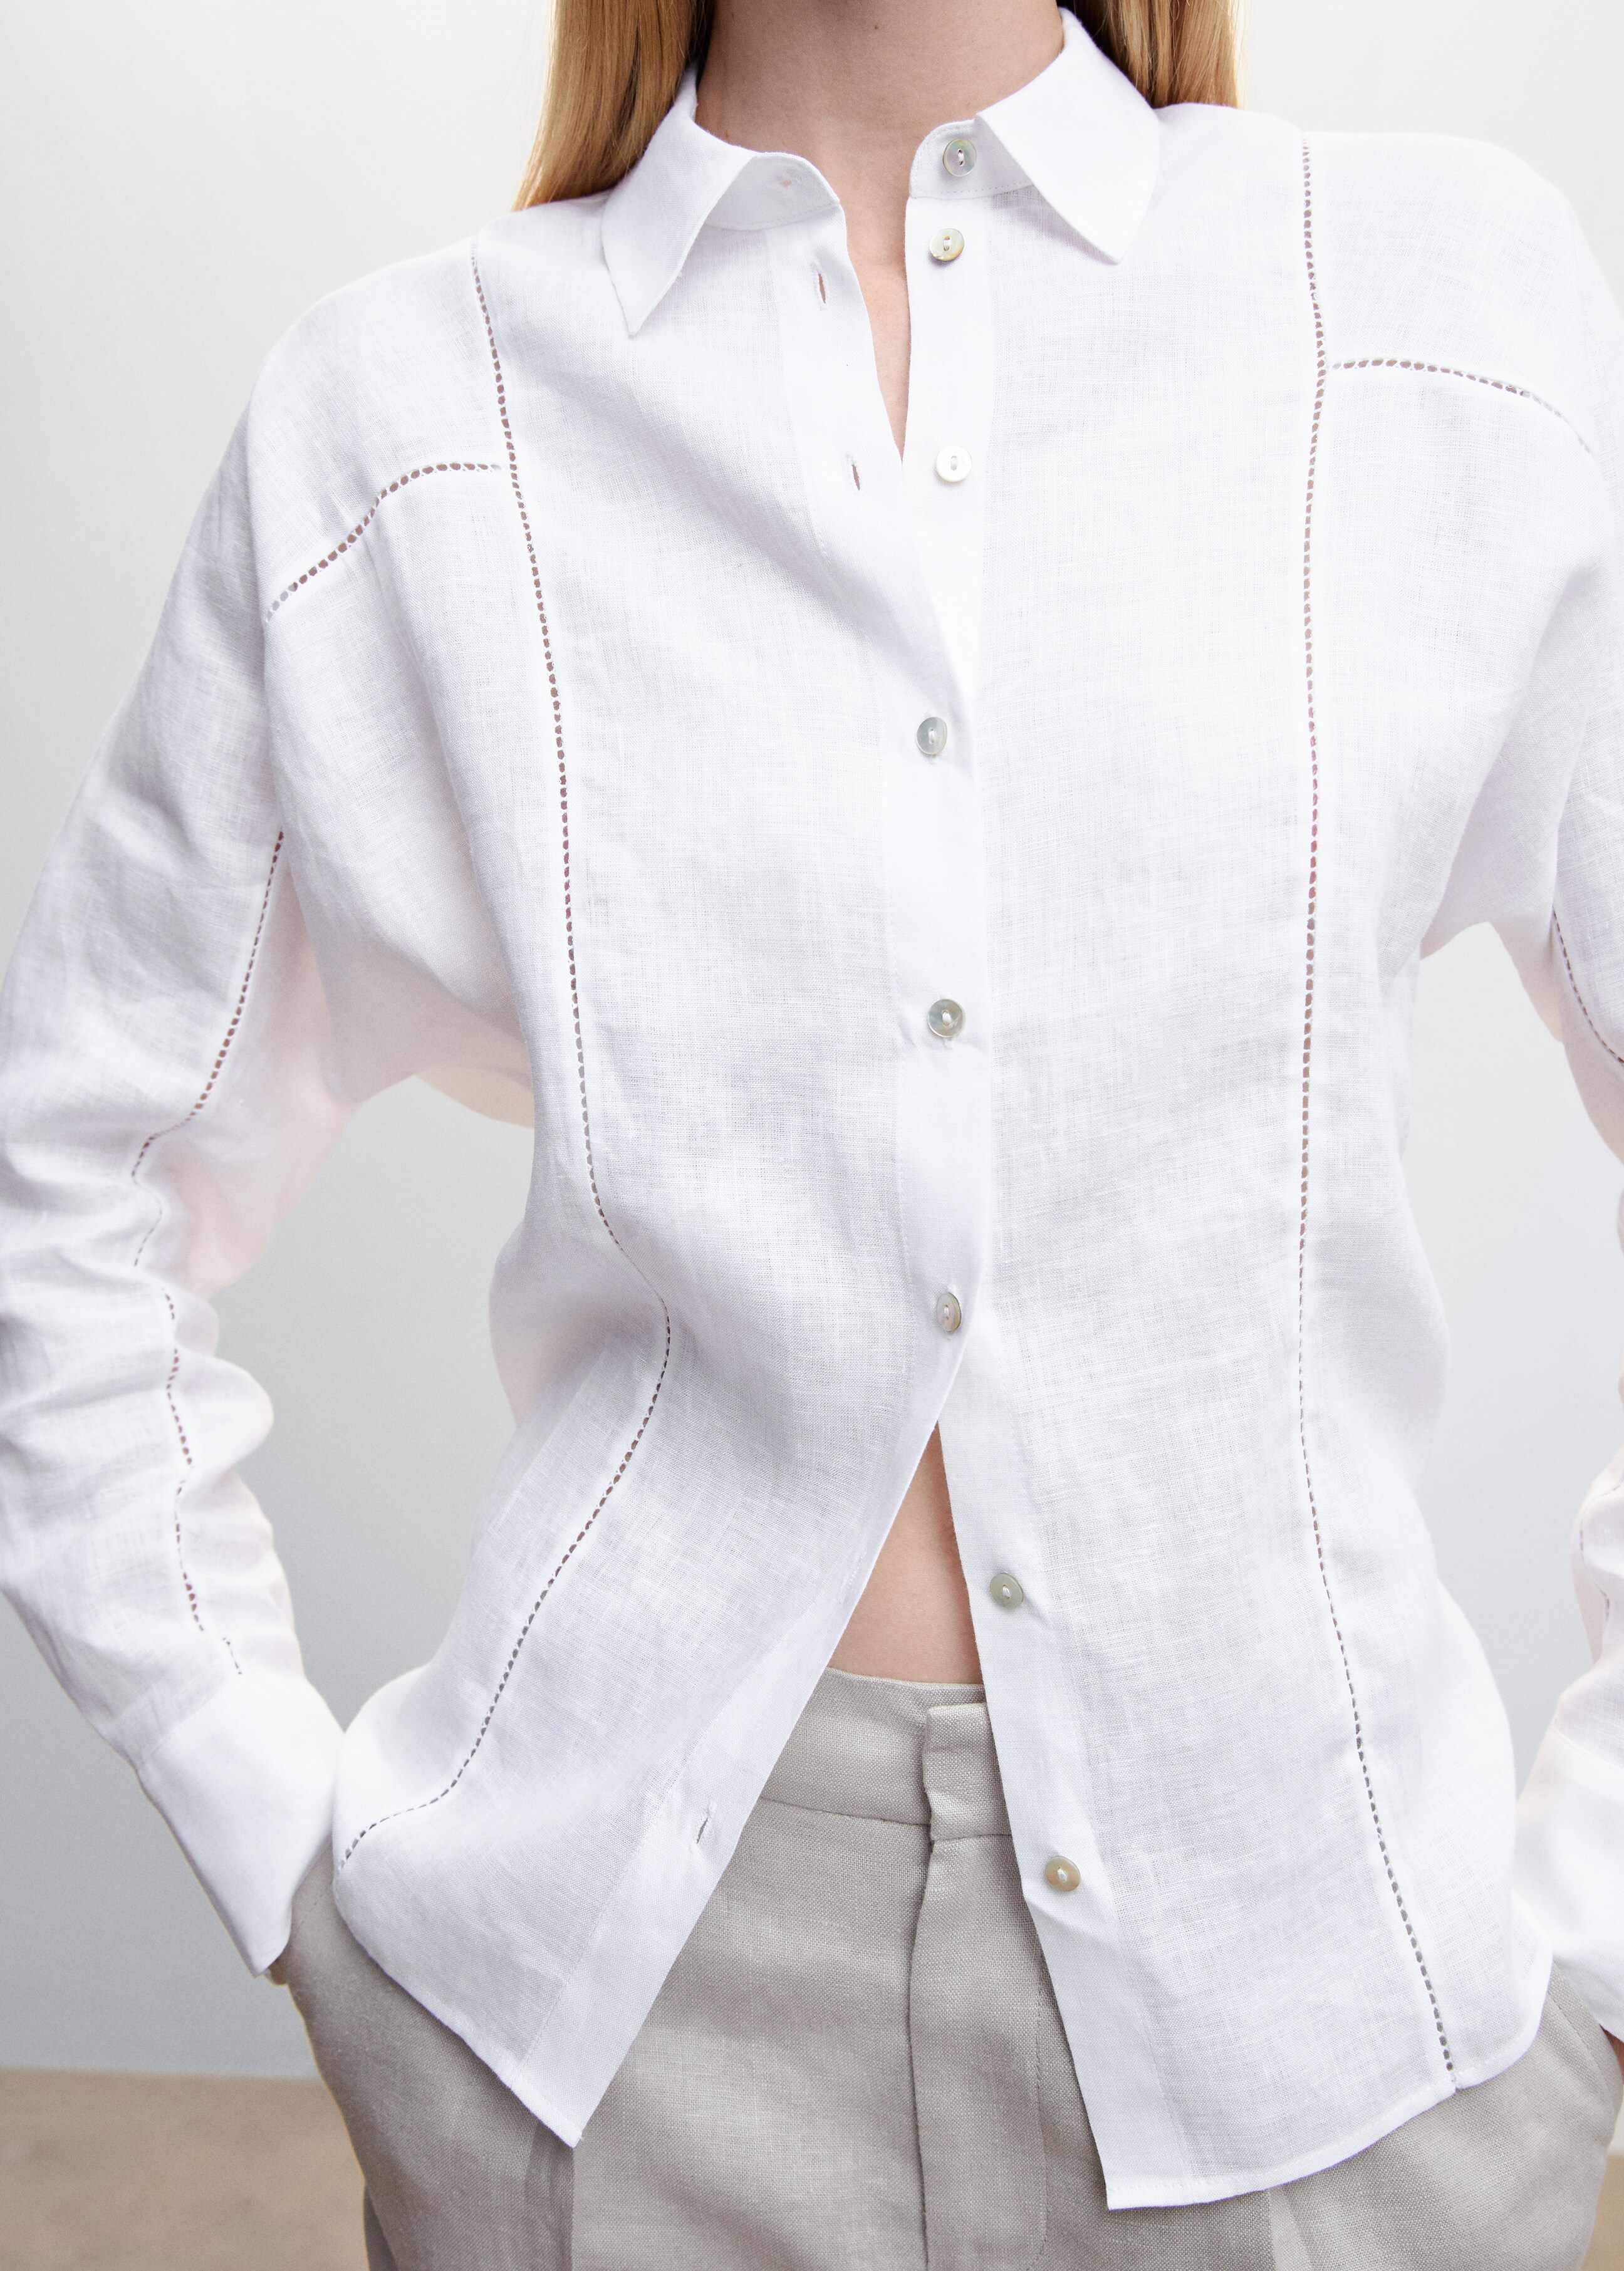 100% linen blouse - Details of the article 6